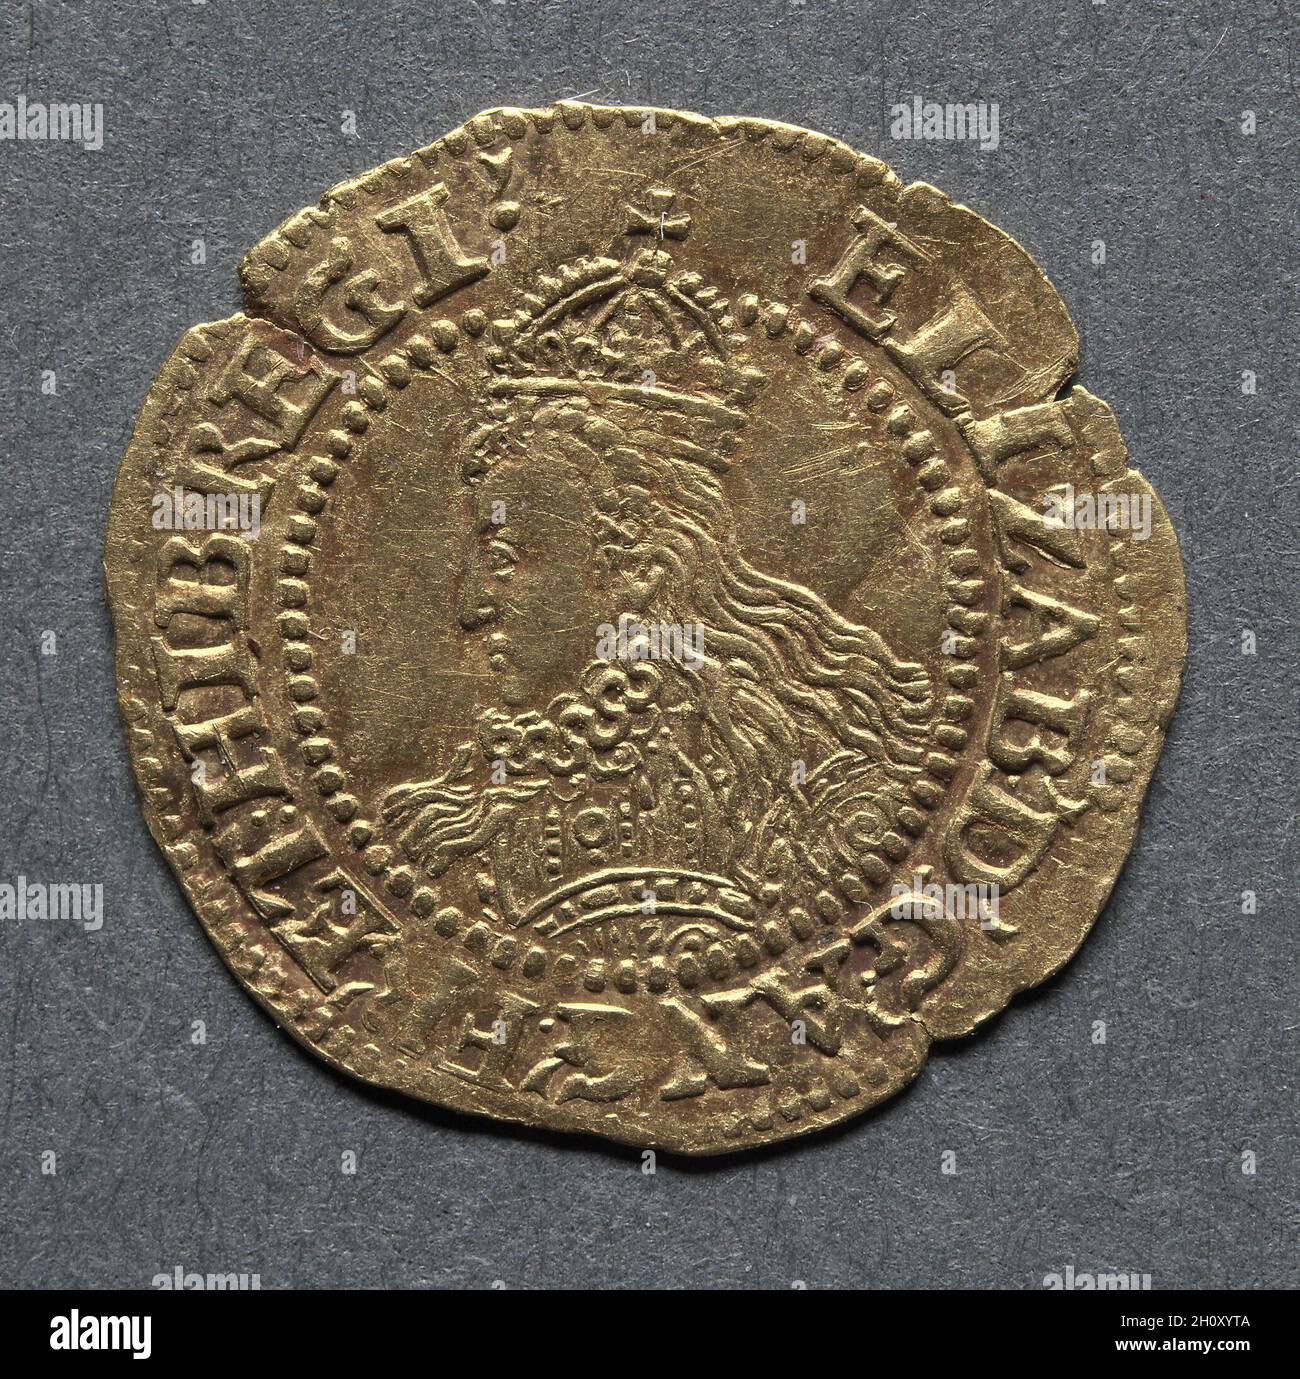 HalfCrown: Elisabetta i (obversa), 1592–95. Inghilterra, Elizabeth i, 1558-1603. Oro; diametro: 1.5 cm (9/16 poll.). Foto Stock